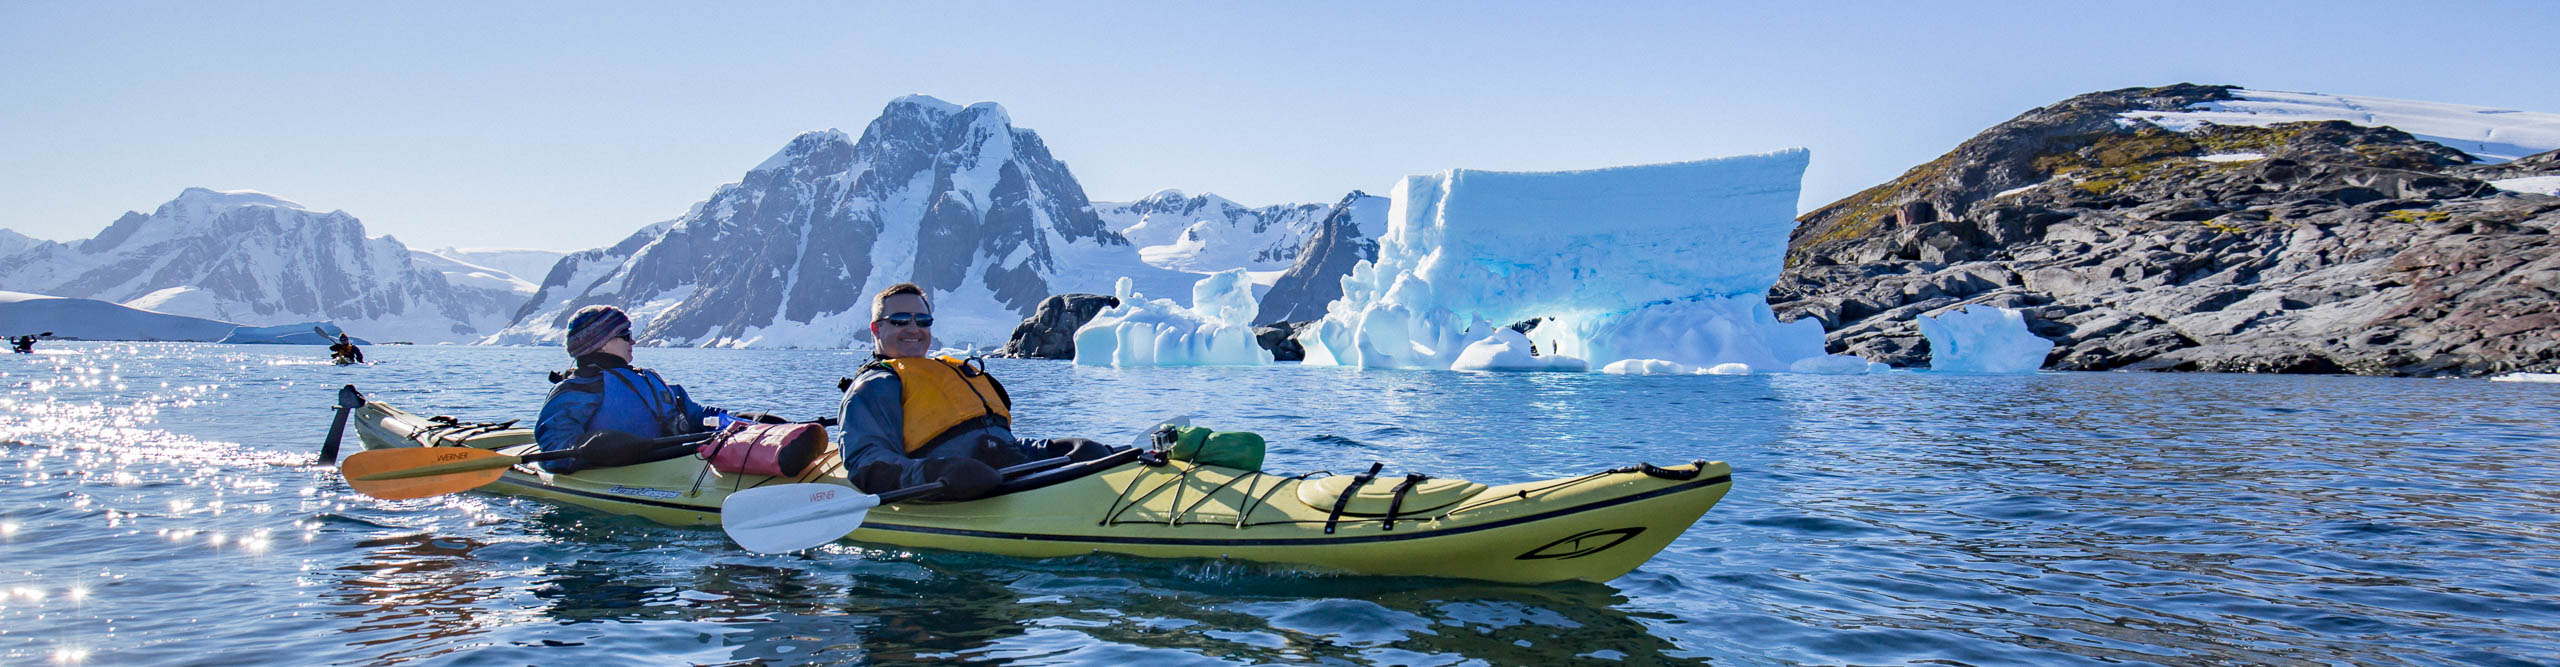 Group kayaking through the icebergs in Antarctica 